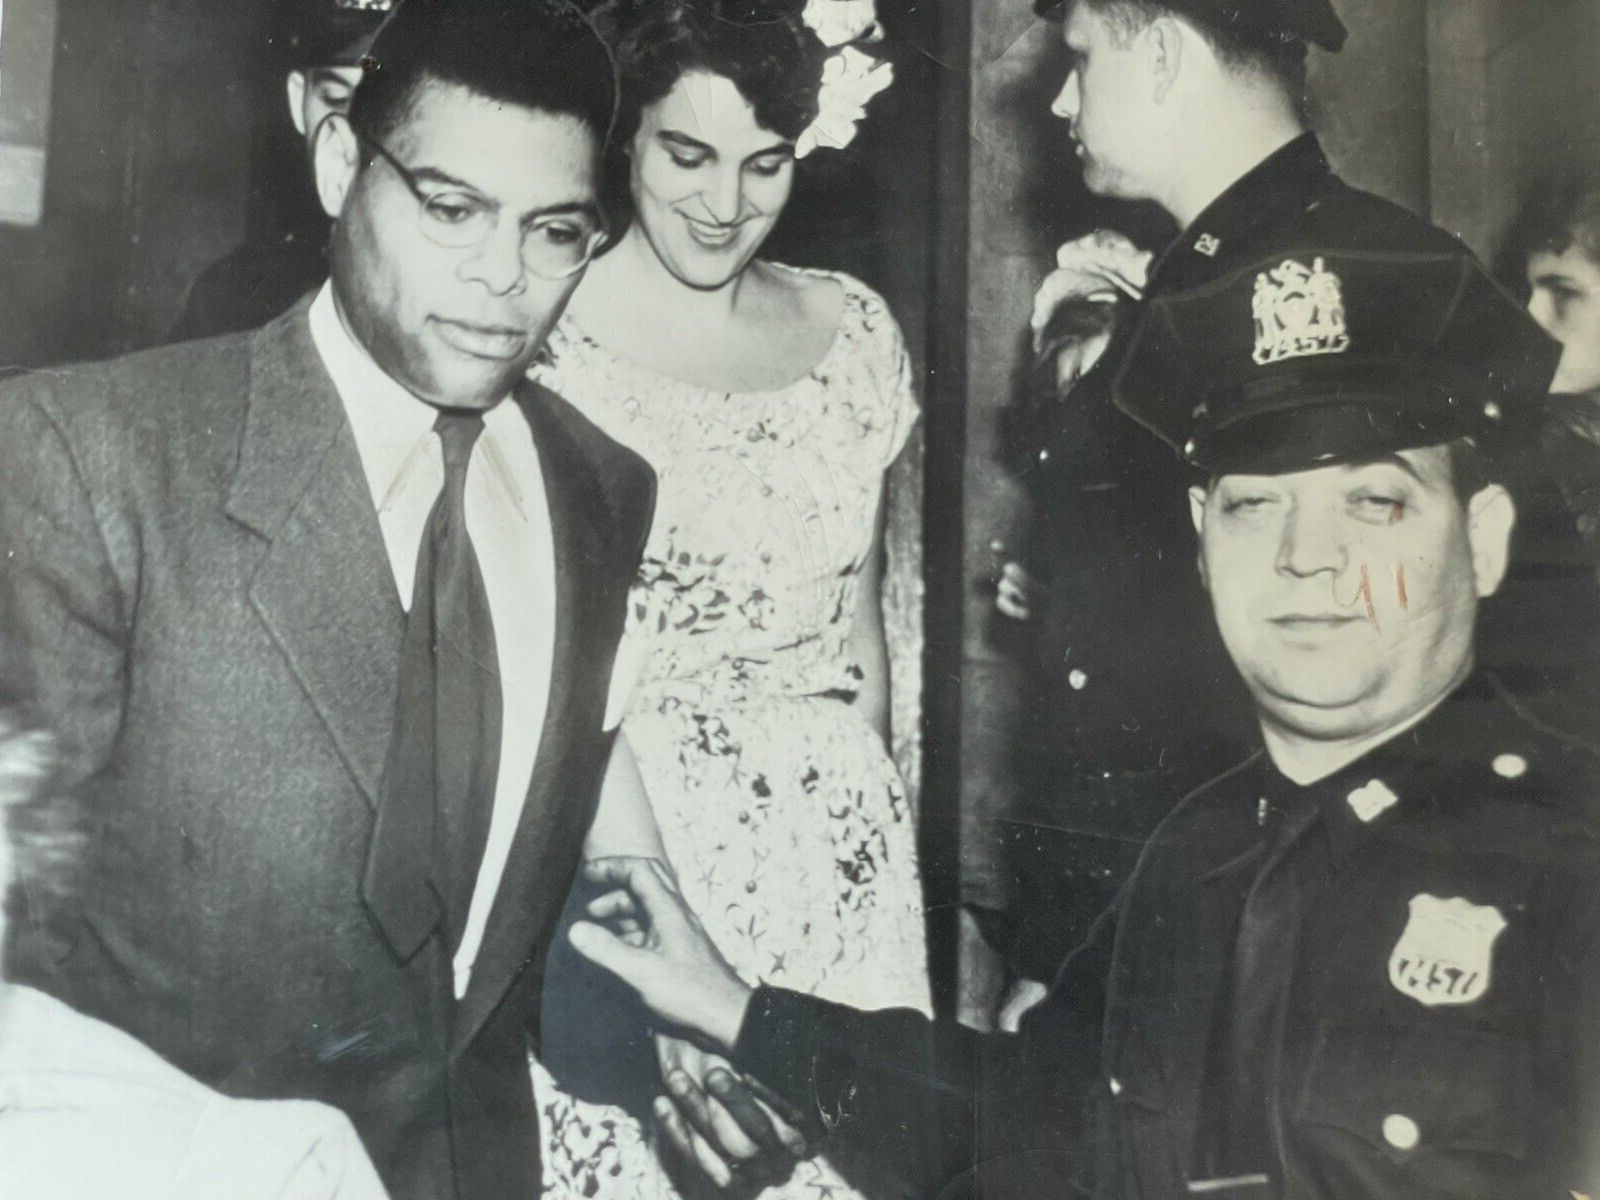 Paul Roberson's Son Civil Rights 1949 #historyinpieces